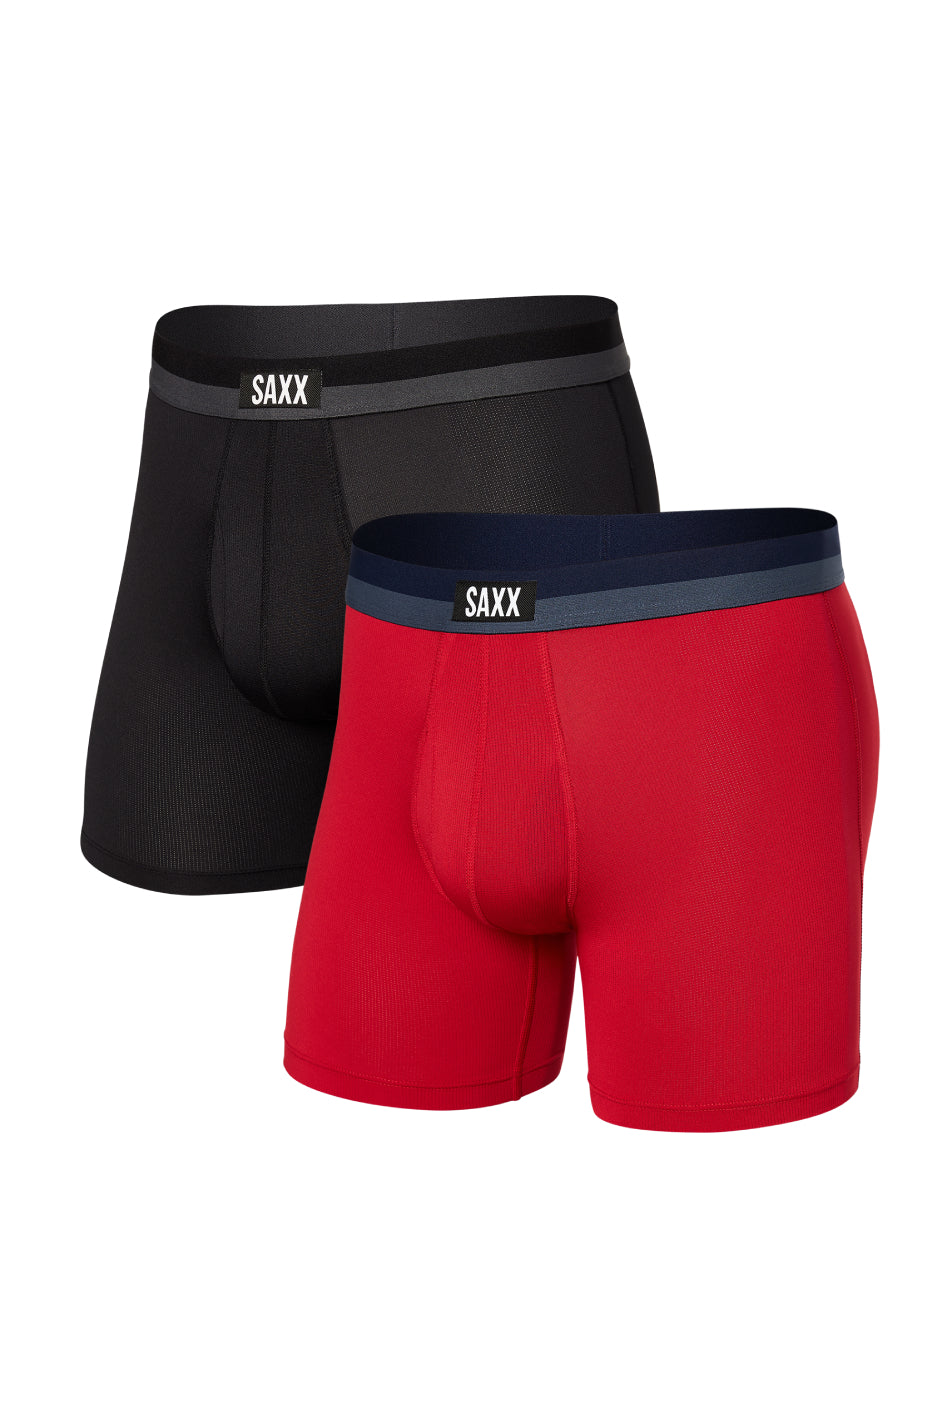 SAXX 2 Pack Men's Sport Mesh Boxer Brief